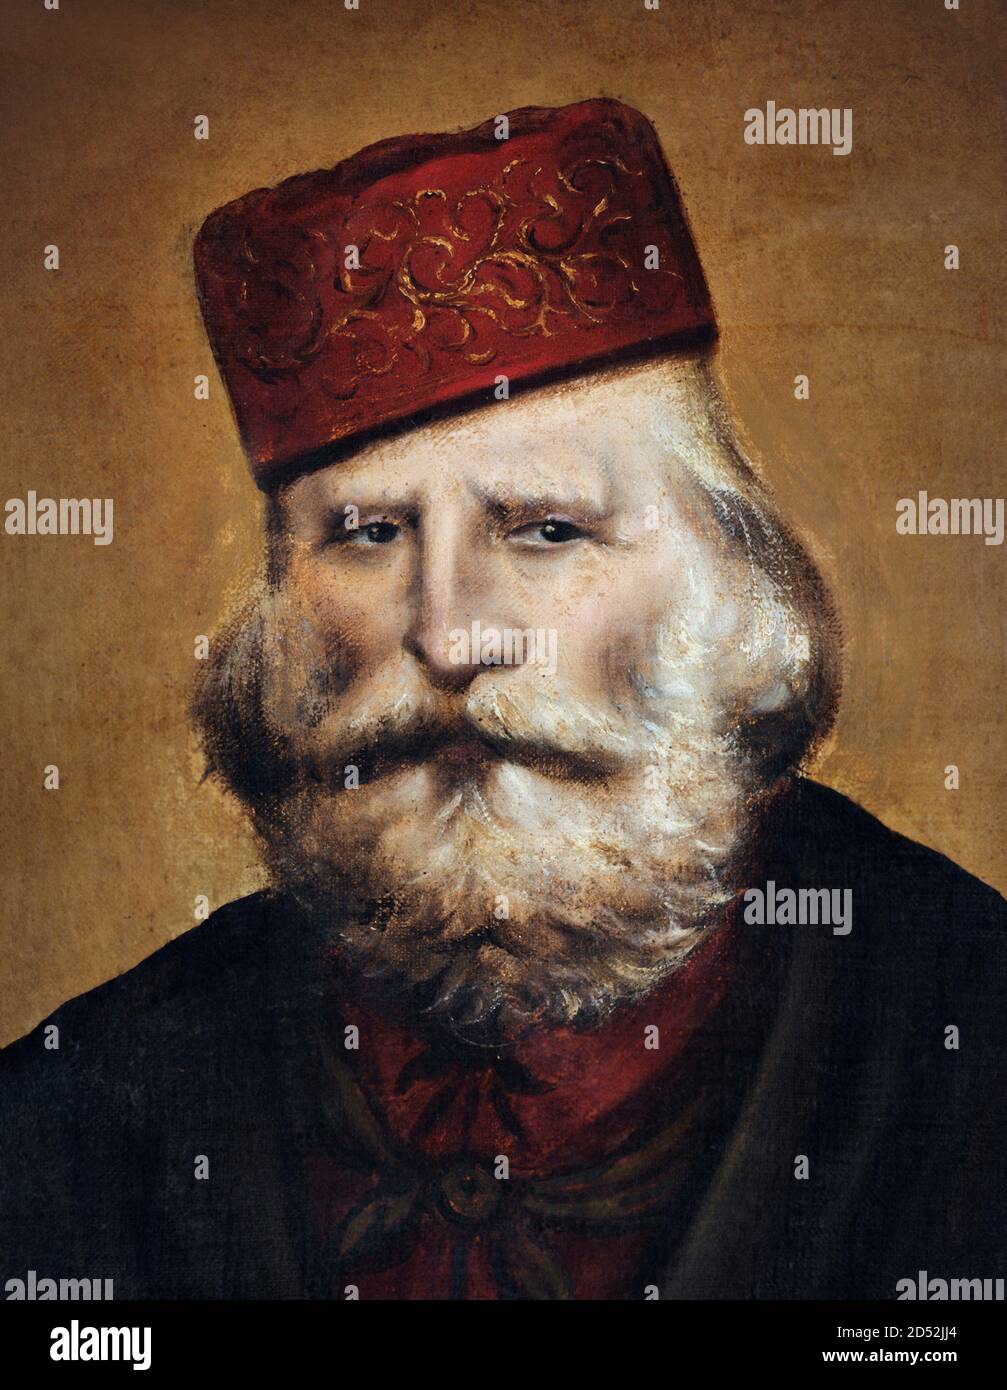 Giuseppe Garibaldi. Portrait of the Italian general and politician, Giuseppe Maria Garibaldi (1807-1882) Stock Photo